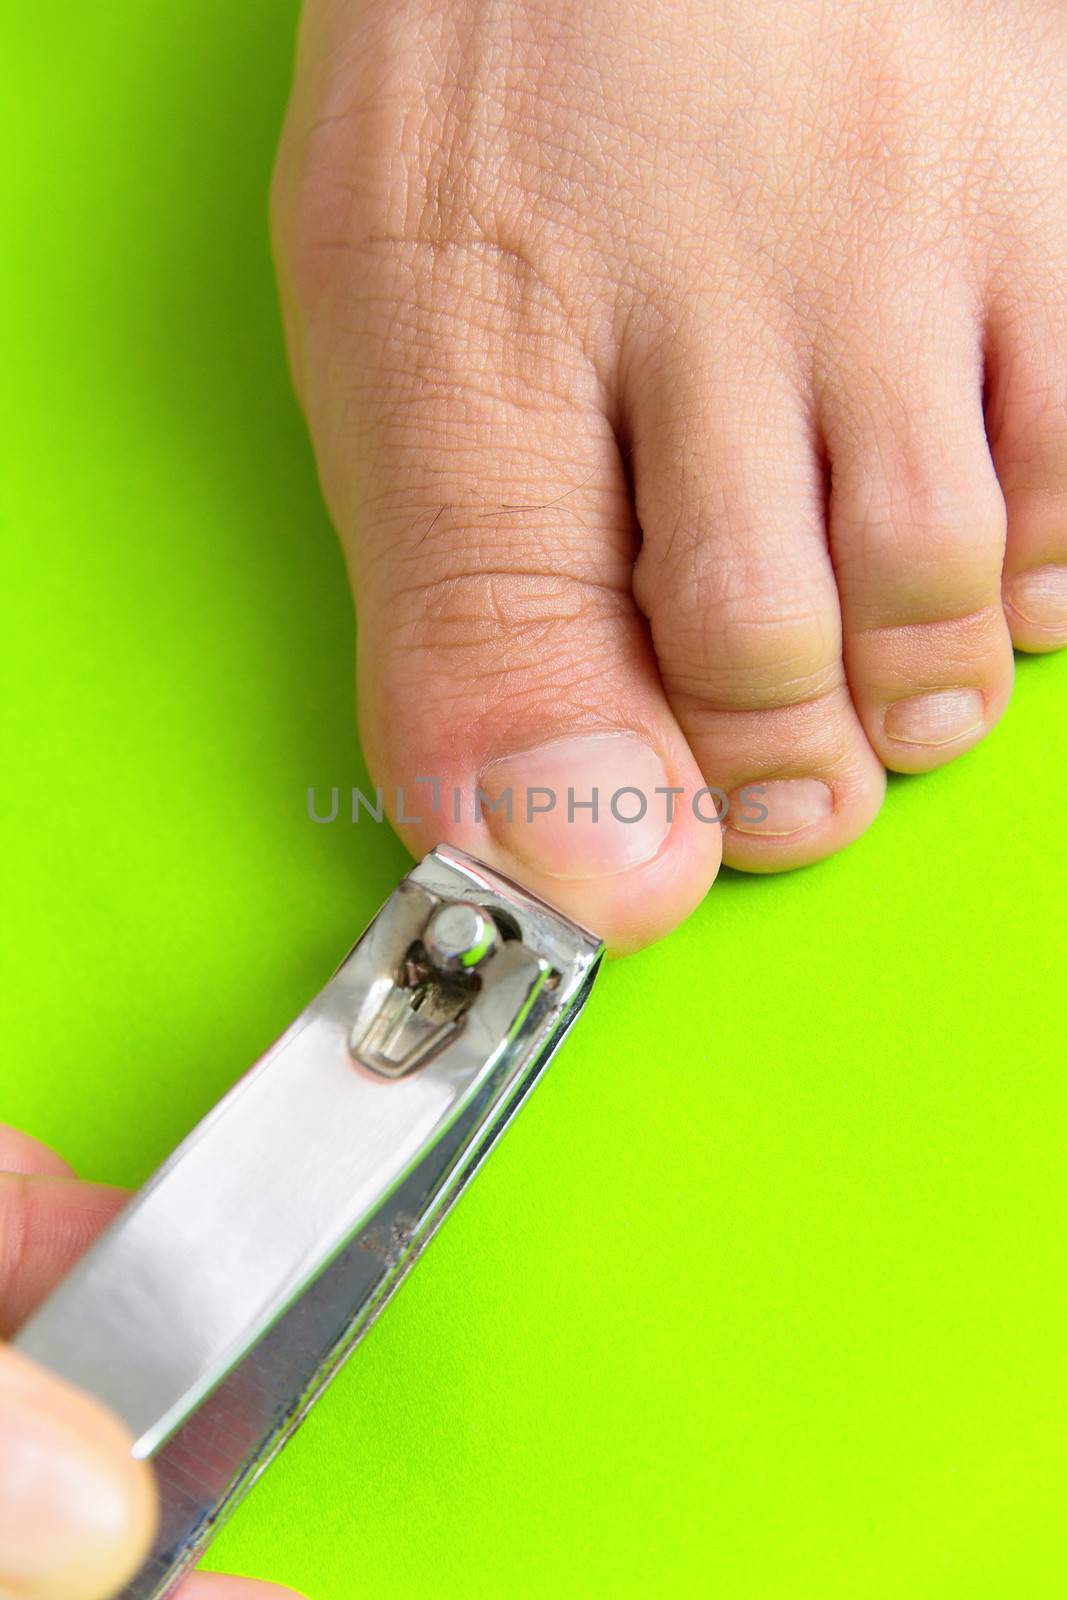 Cutting your toenails